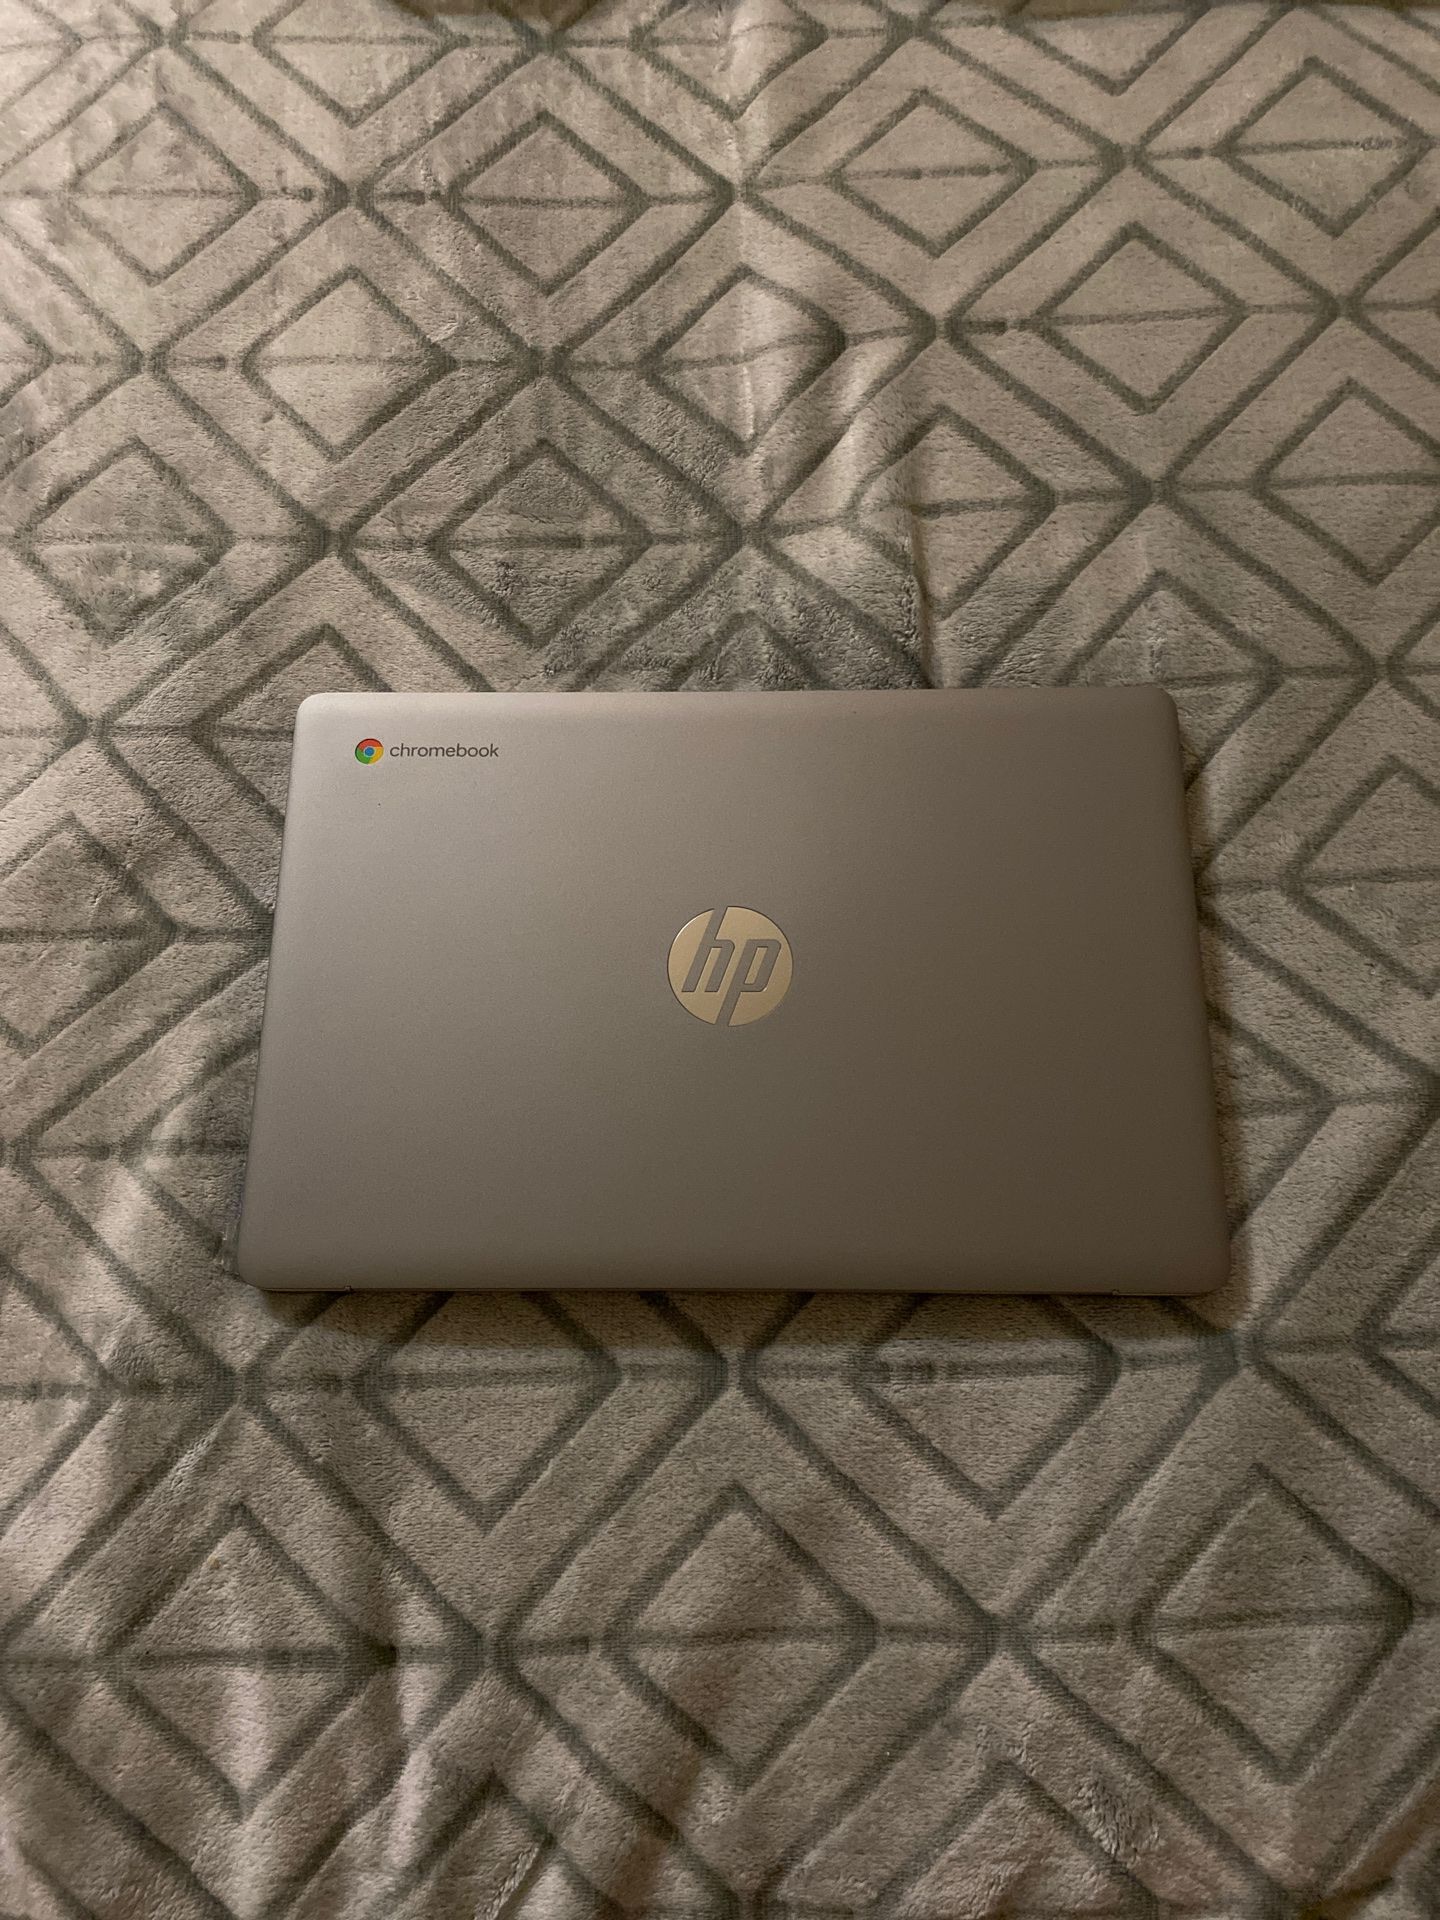 HP Chrome Book laptop